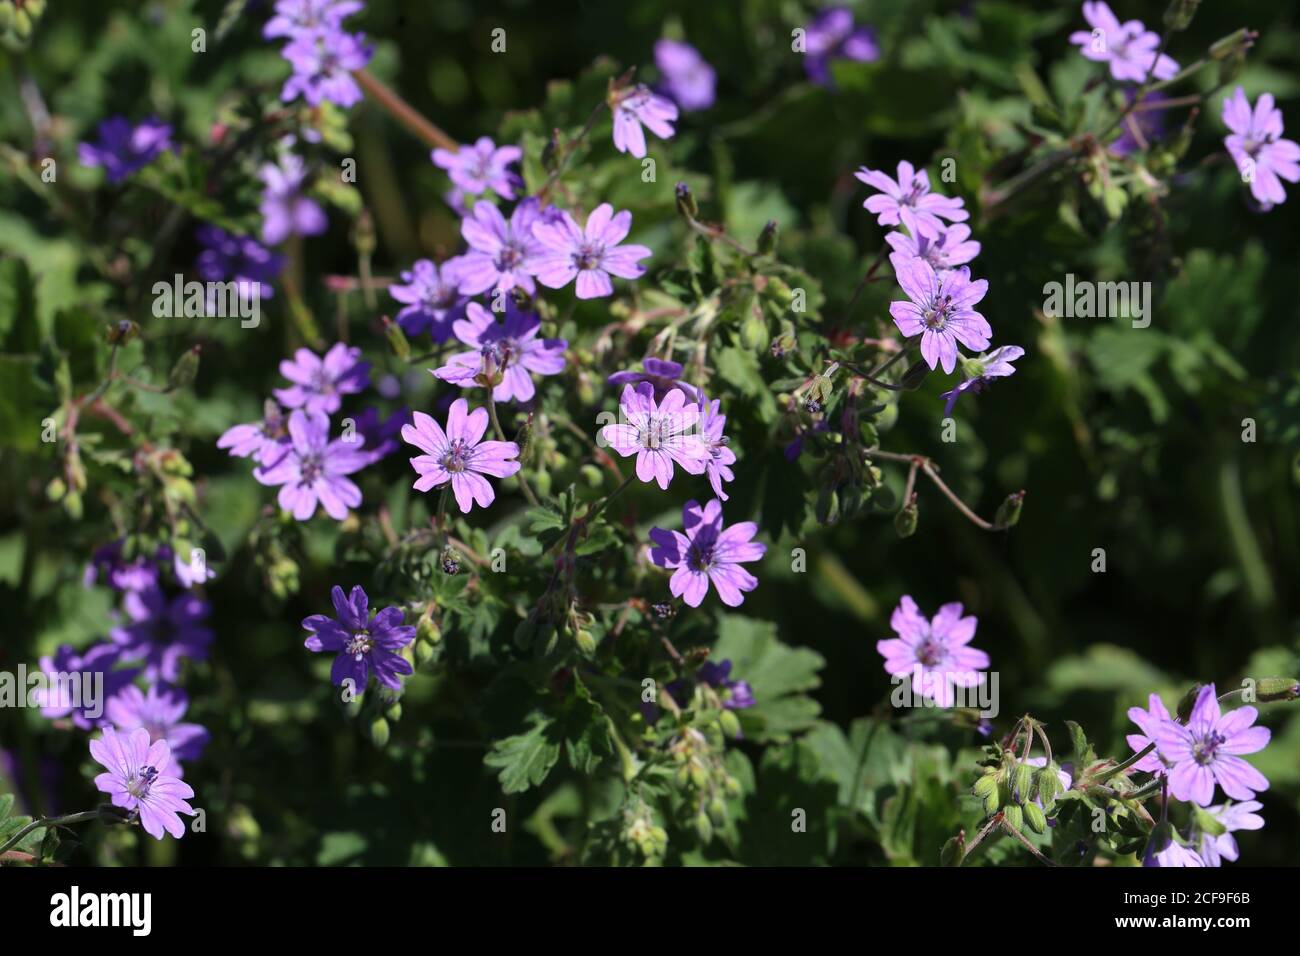 Closeup shot of beautiful purple browallia speciosa flowers in a garden Stock Photo